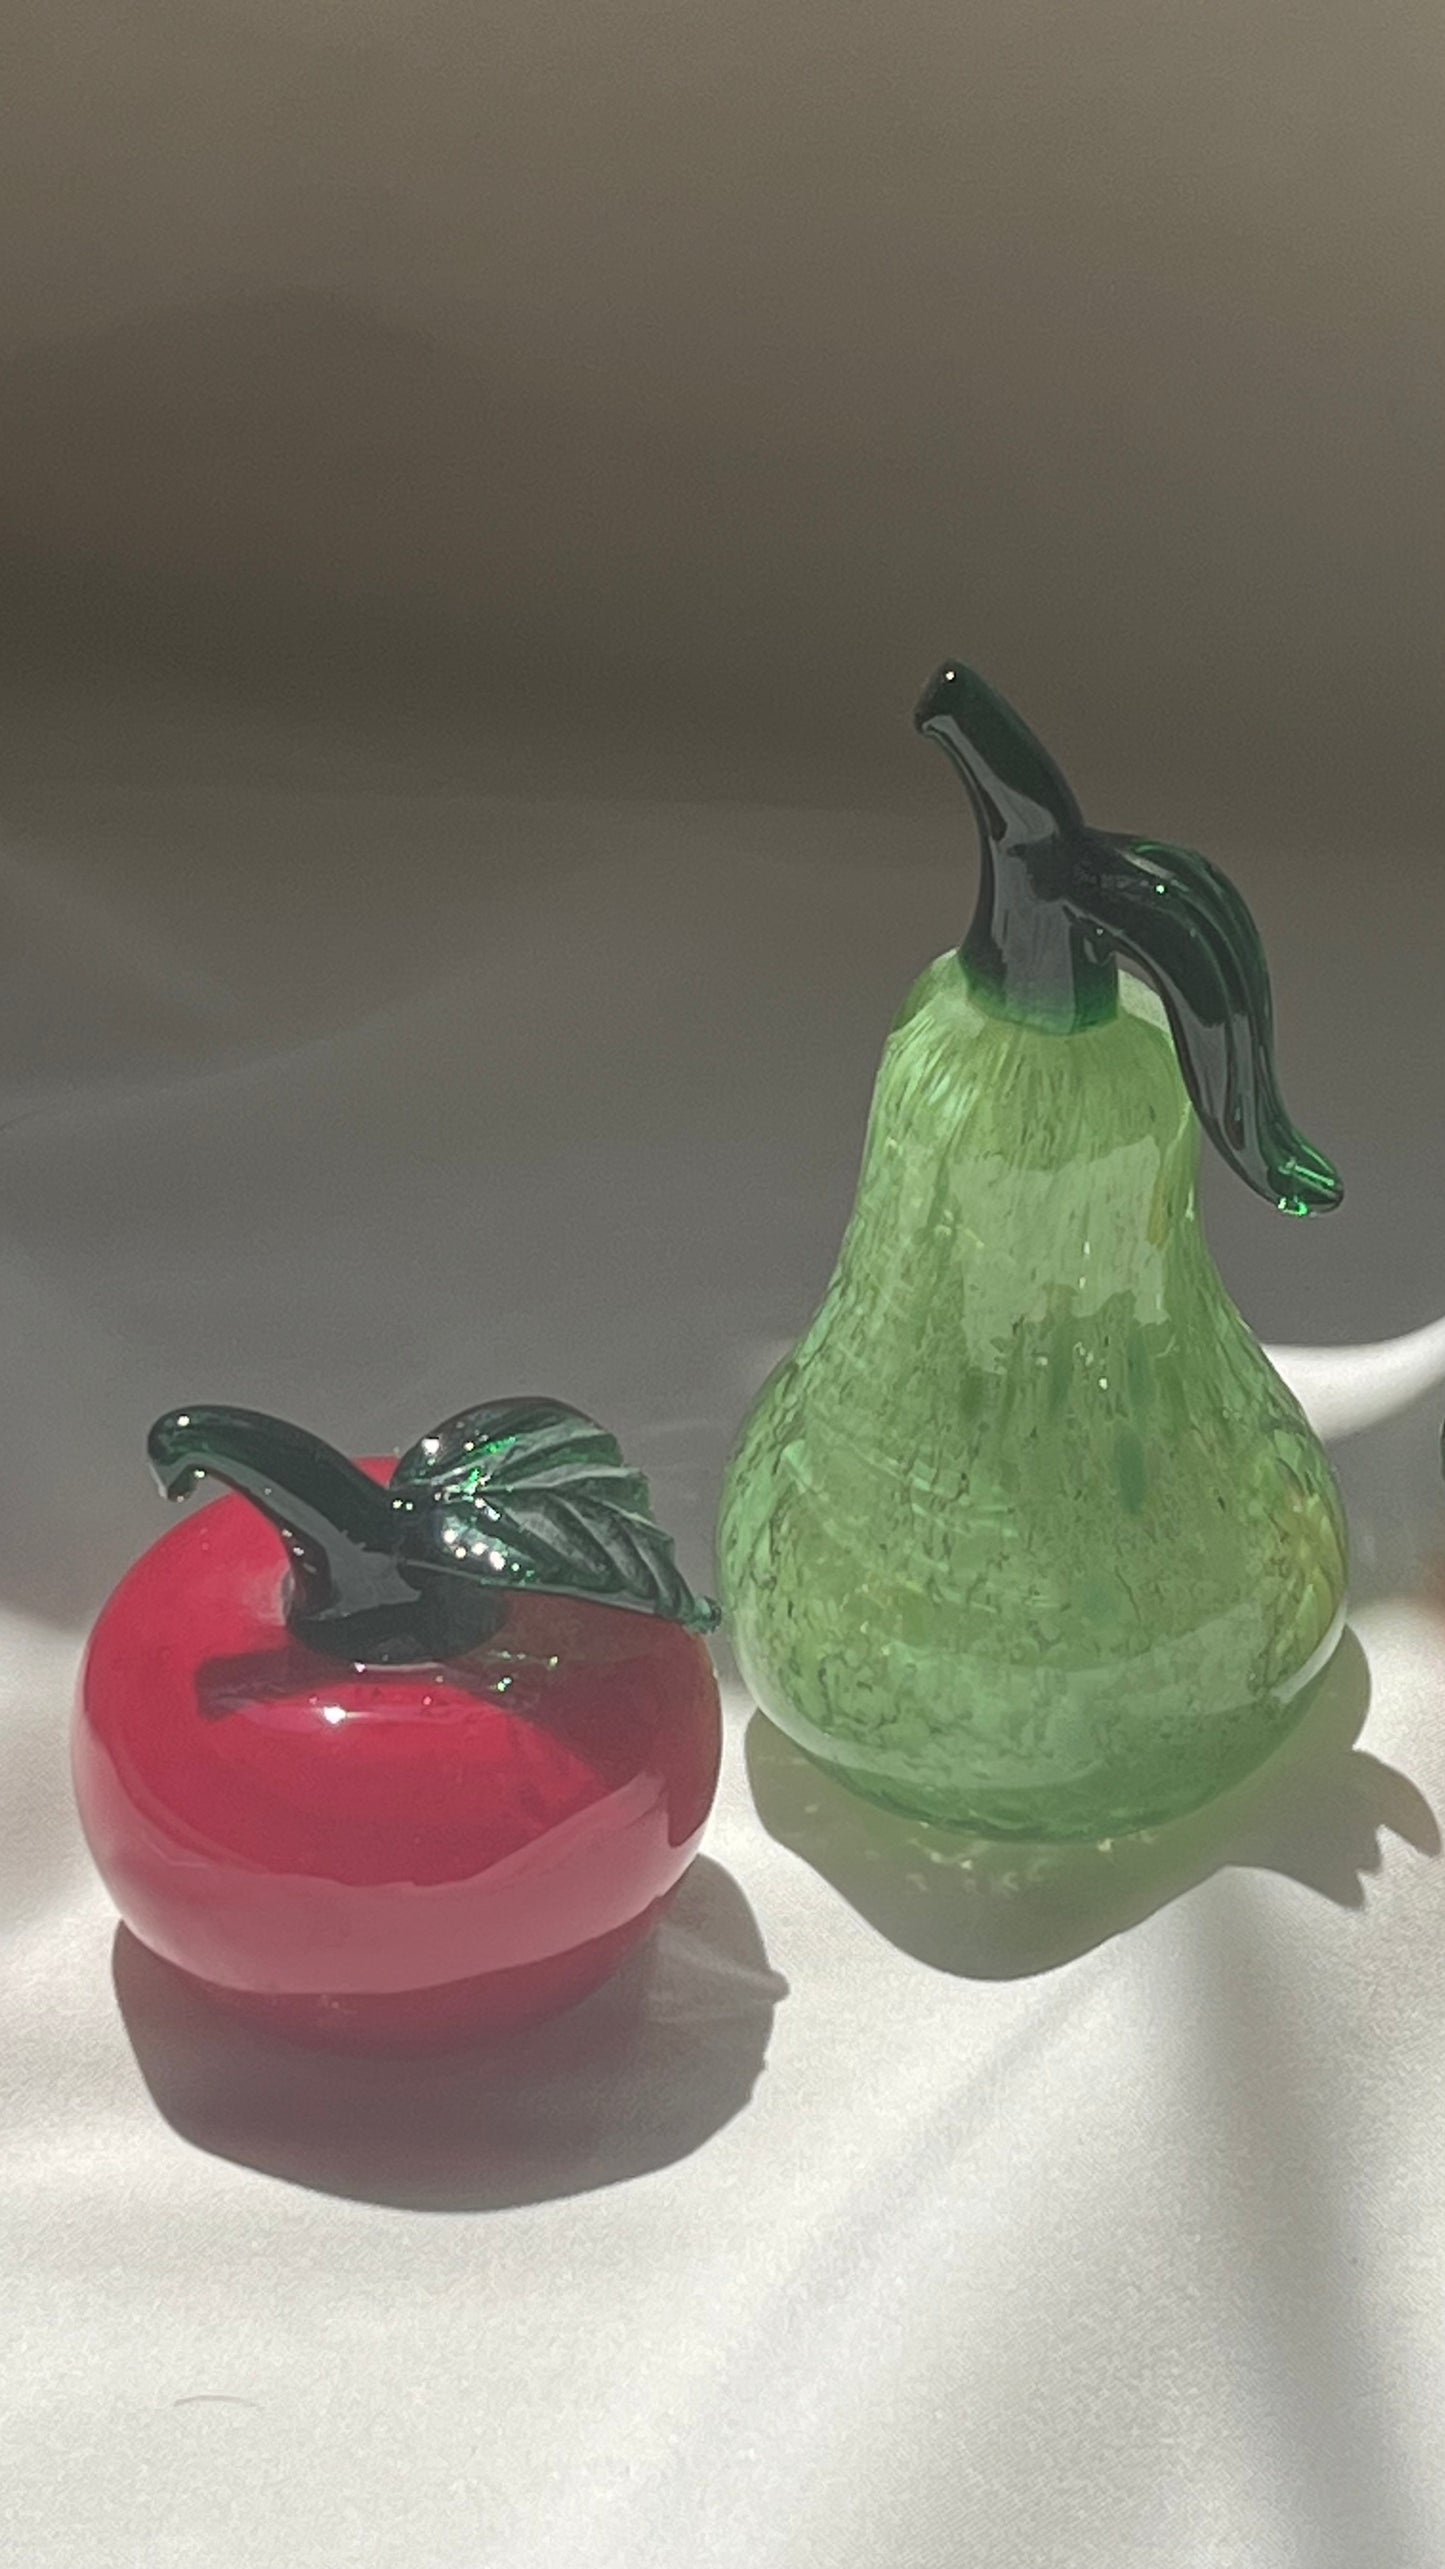 Moreno glass fruit | פירות זכוכית מורנו